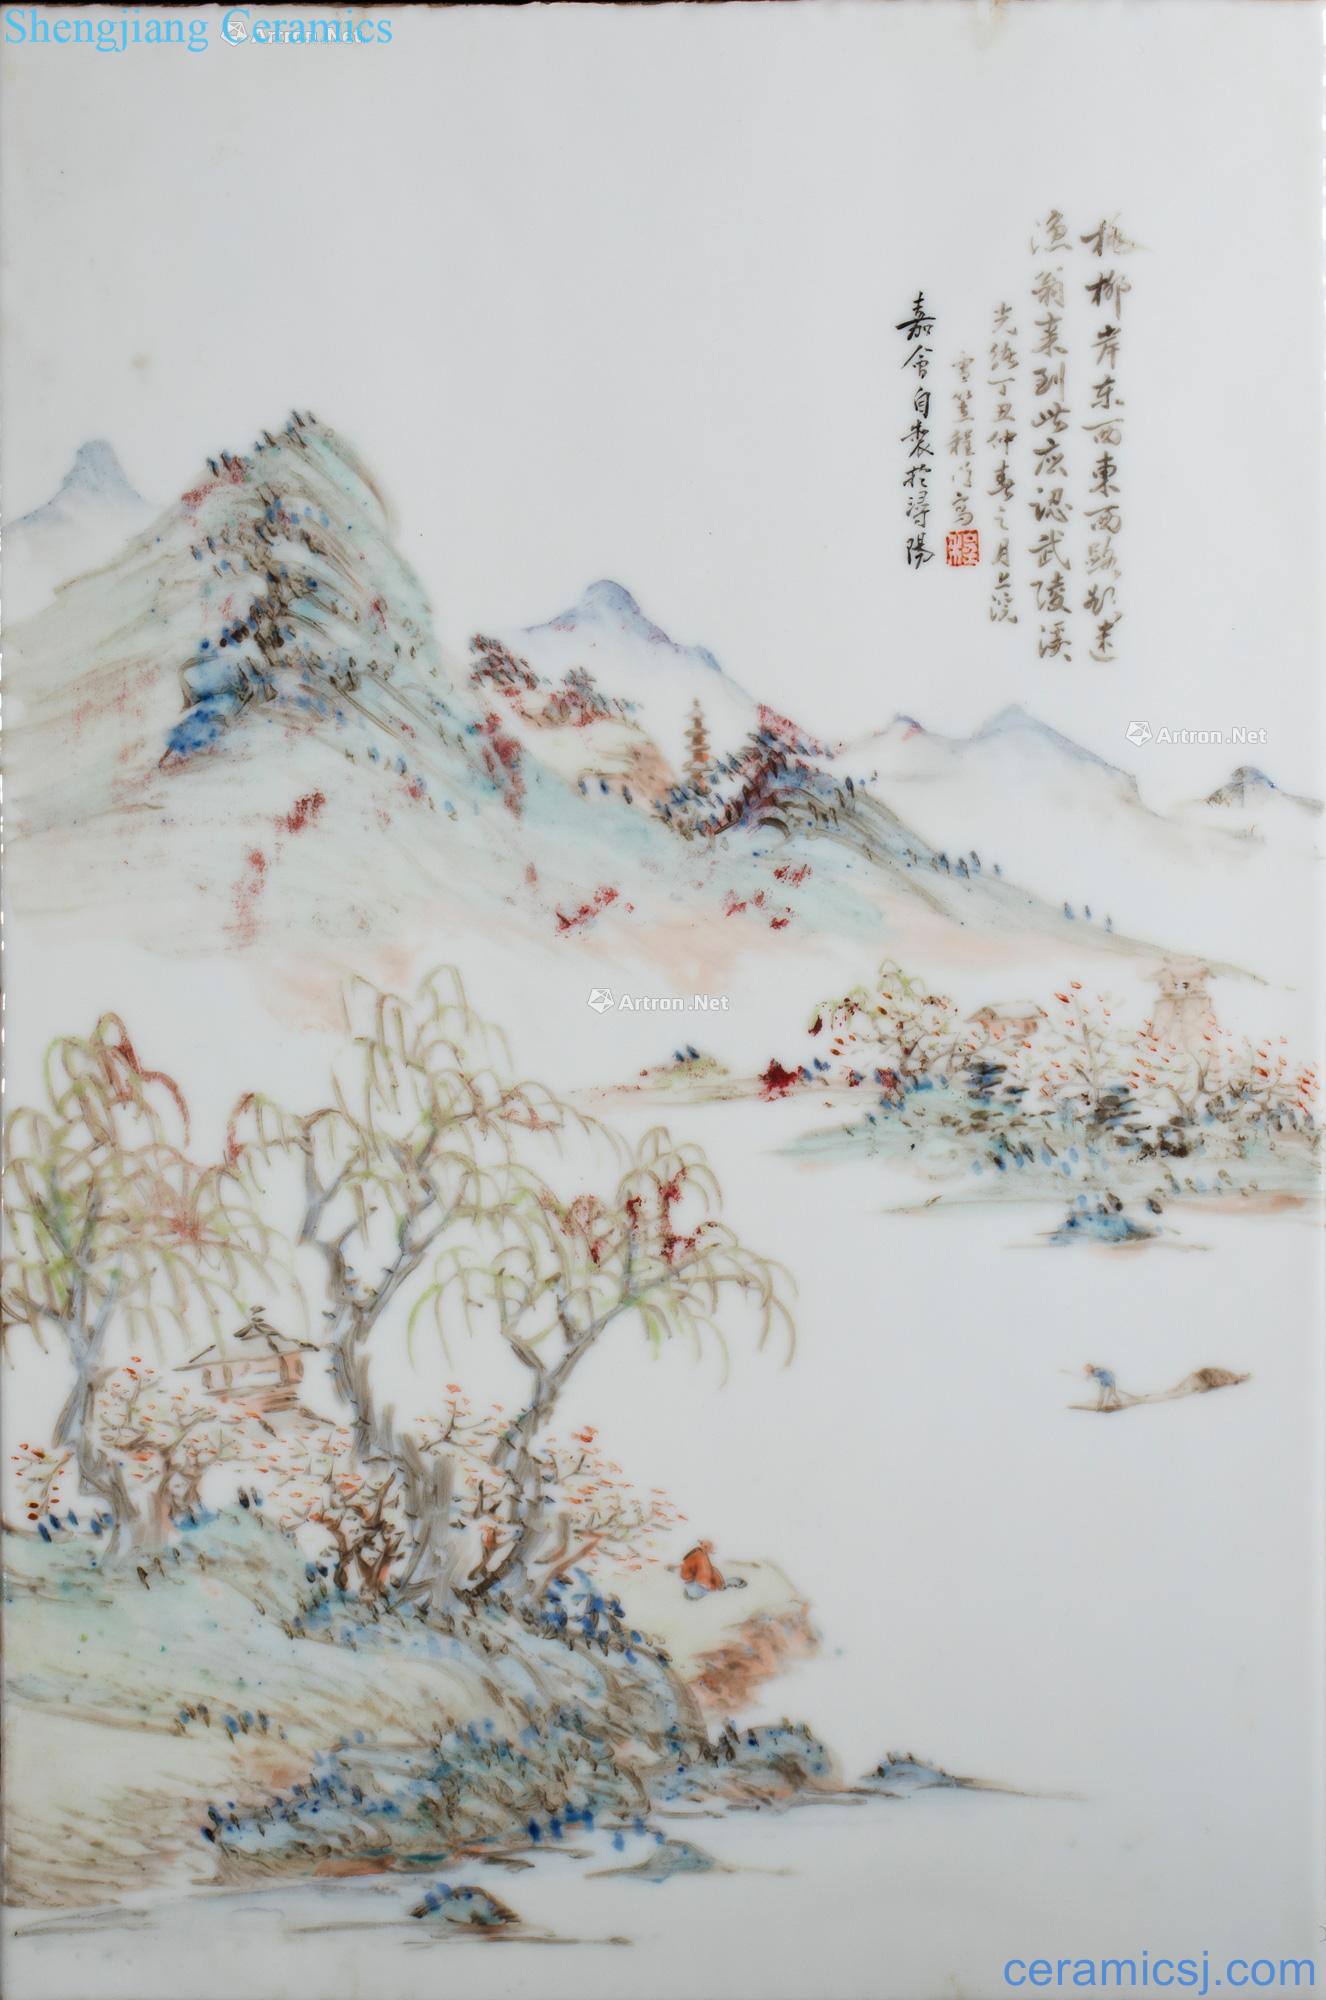 Cheng door reign of qing emperor guangxu shallow color landscape character porcelain plate